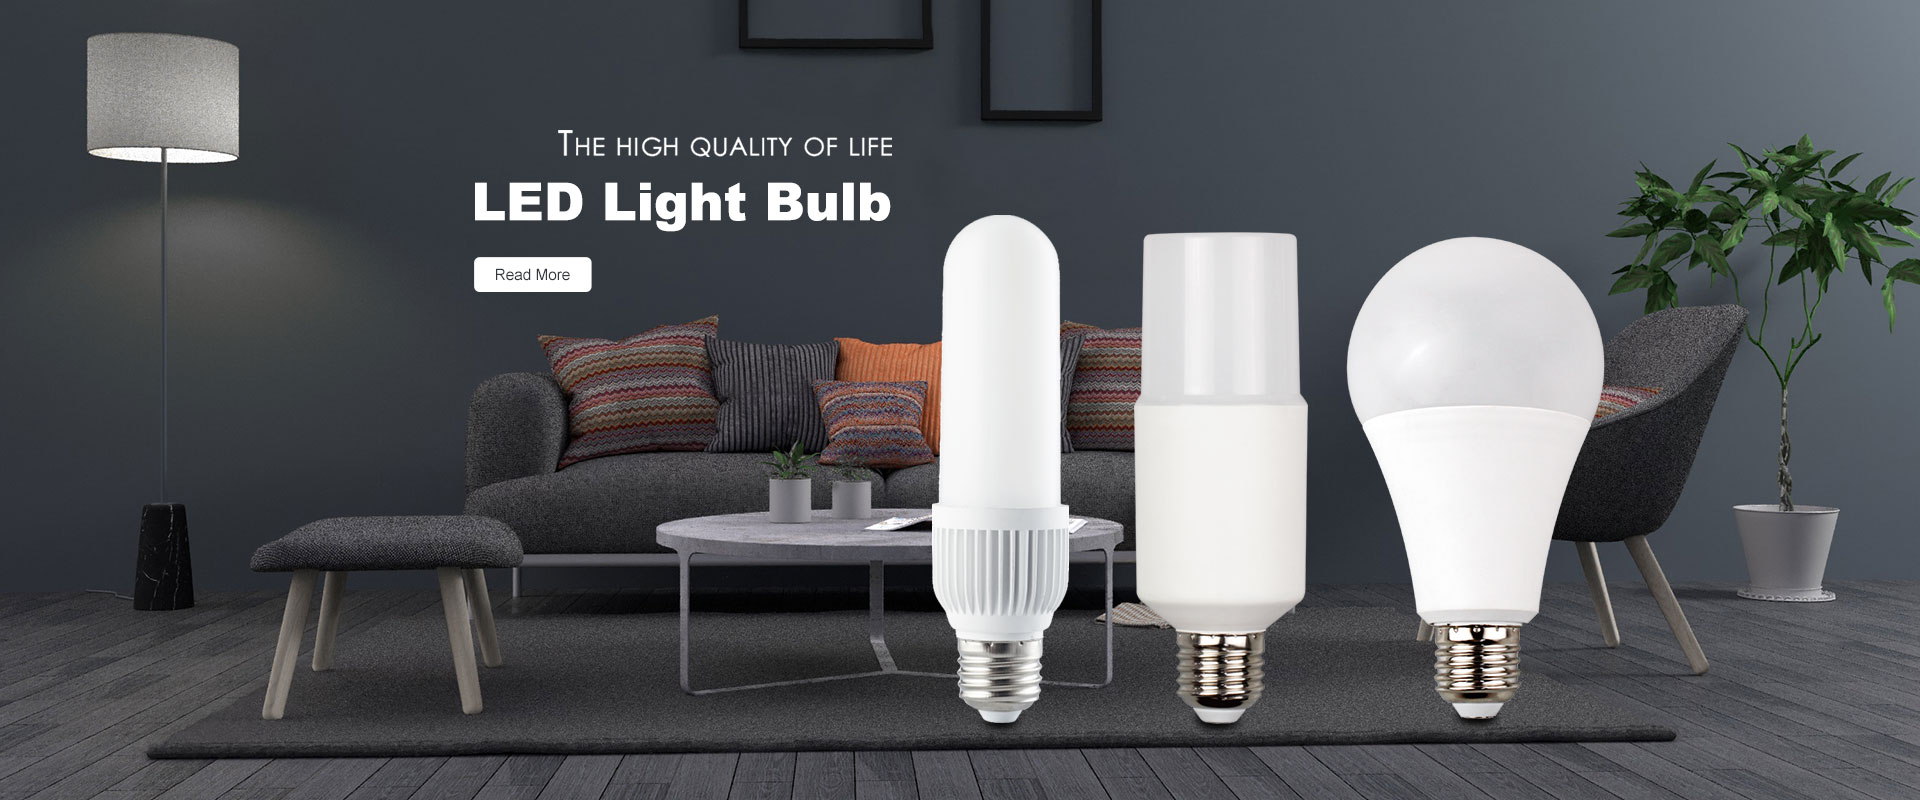 LED Light Bulb Manufacturers